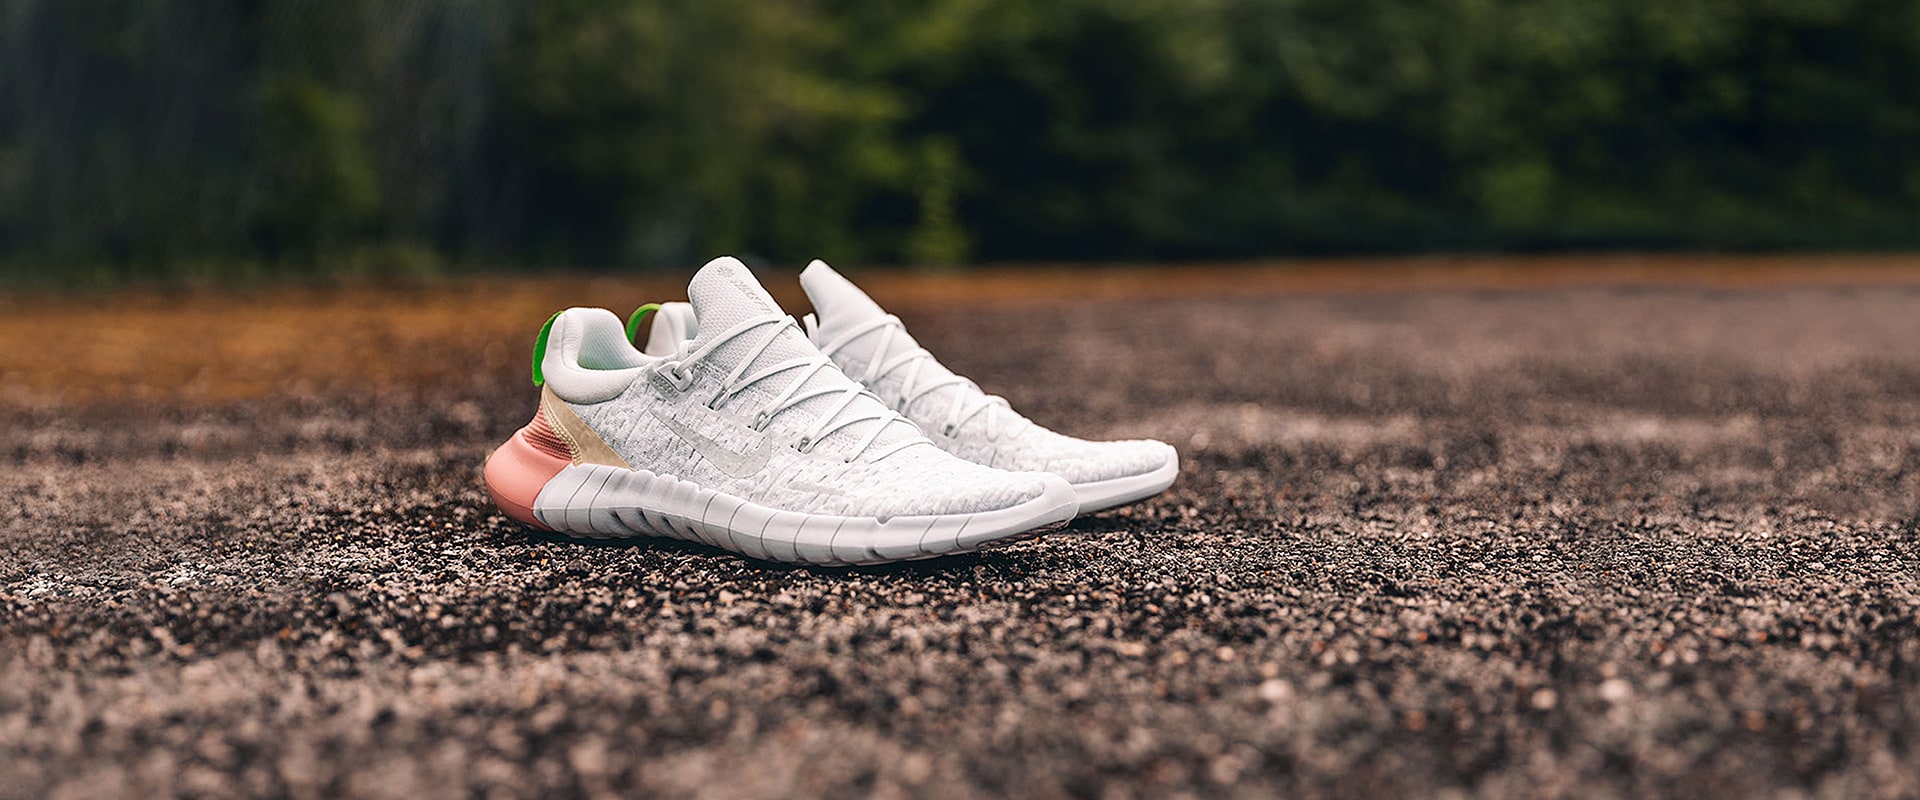 Nike Free Run 5.0 - Off White/Grey Fog-White - Shoes